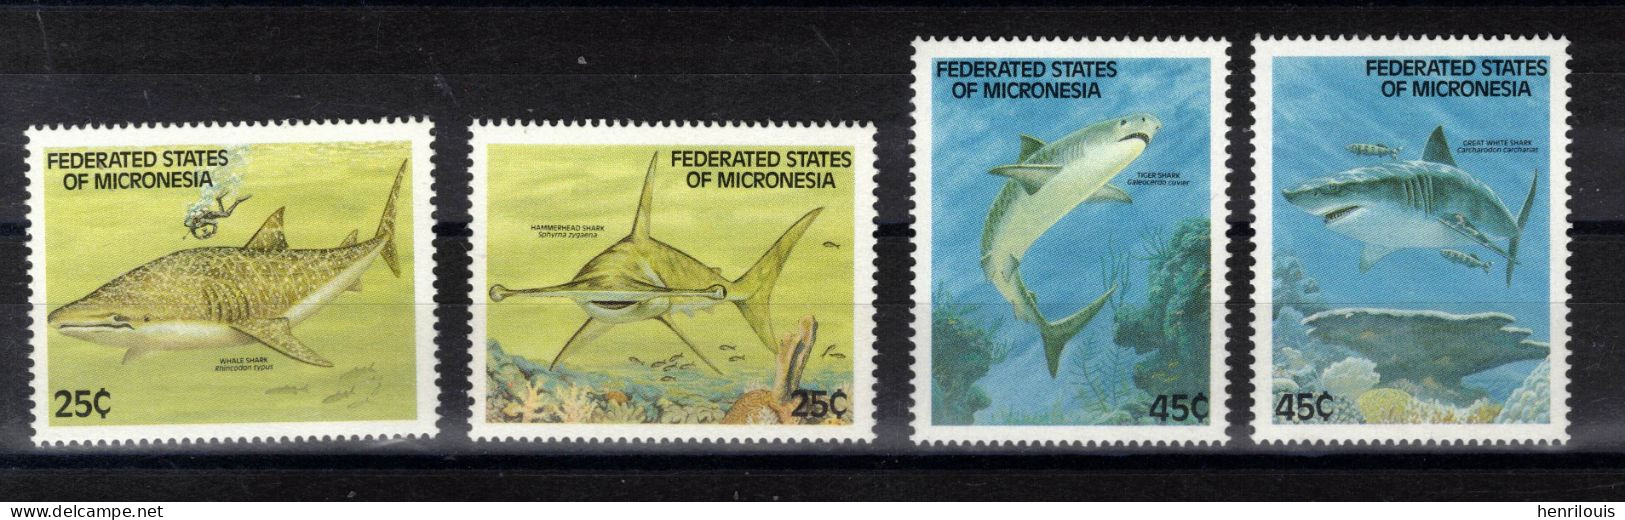 MICRONESIE    Timbres Neufs ** De 1989  ( Ref 4953 A )Faune Marine - Requins - Micronesia